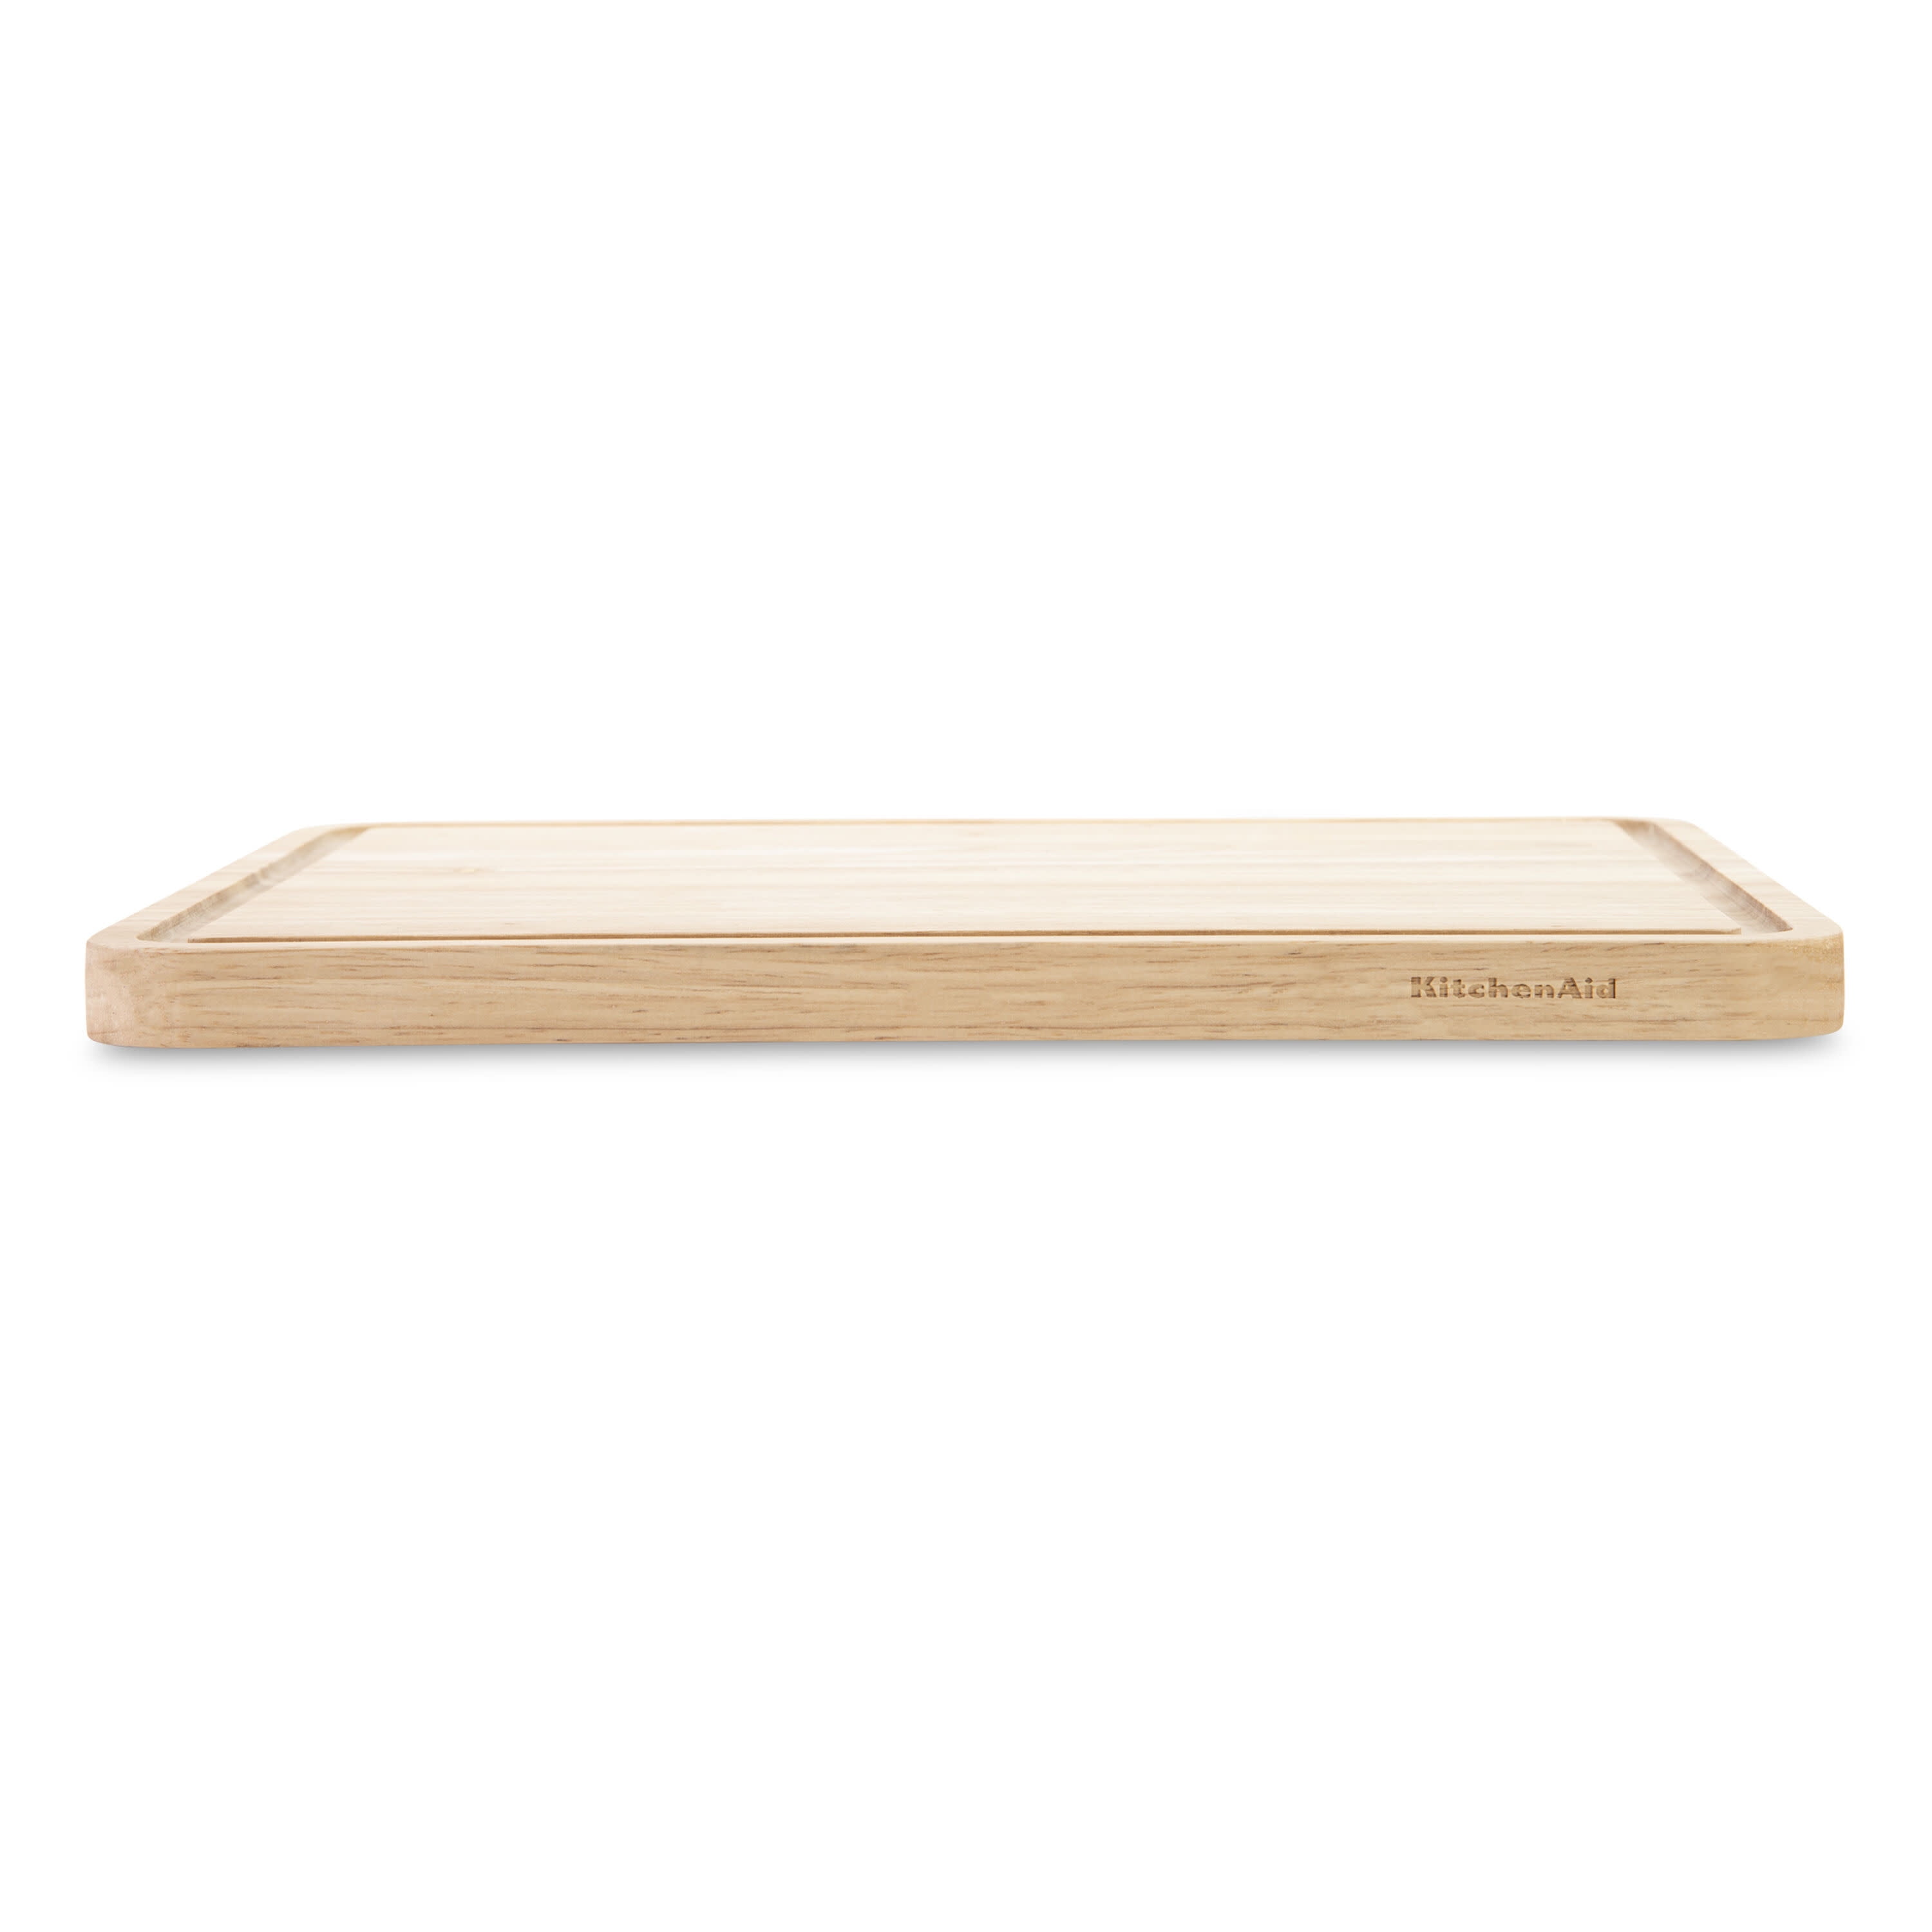  YSTKC Rubber Wood Cutting Board with Handle 17 x 10